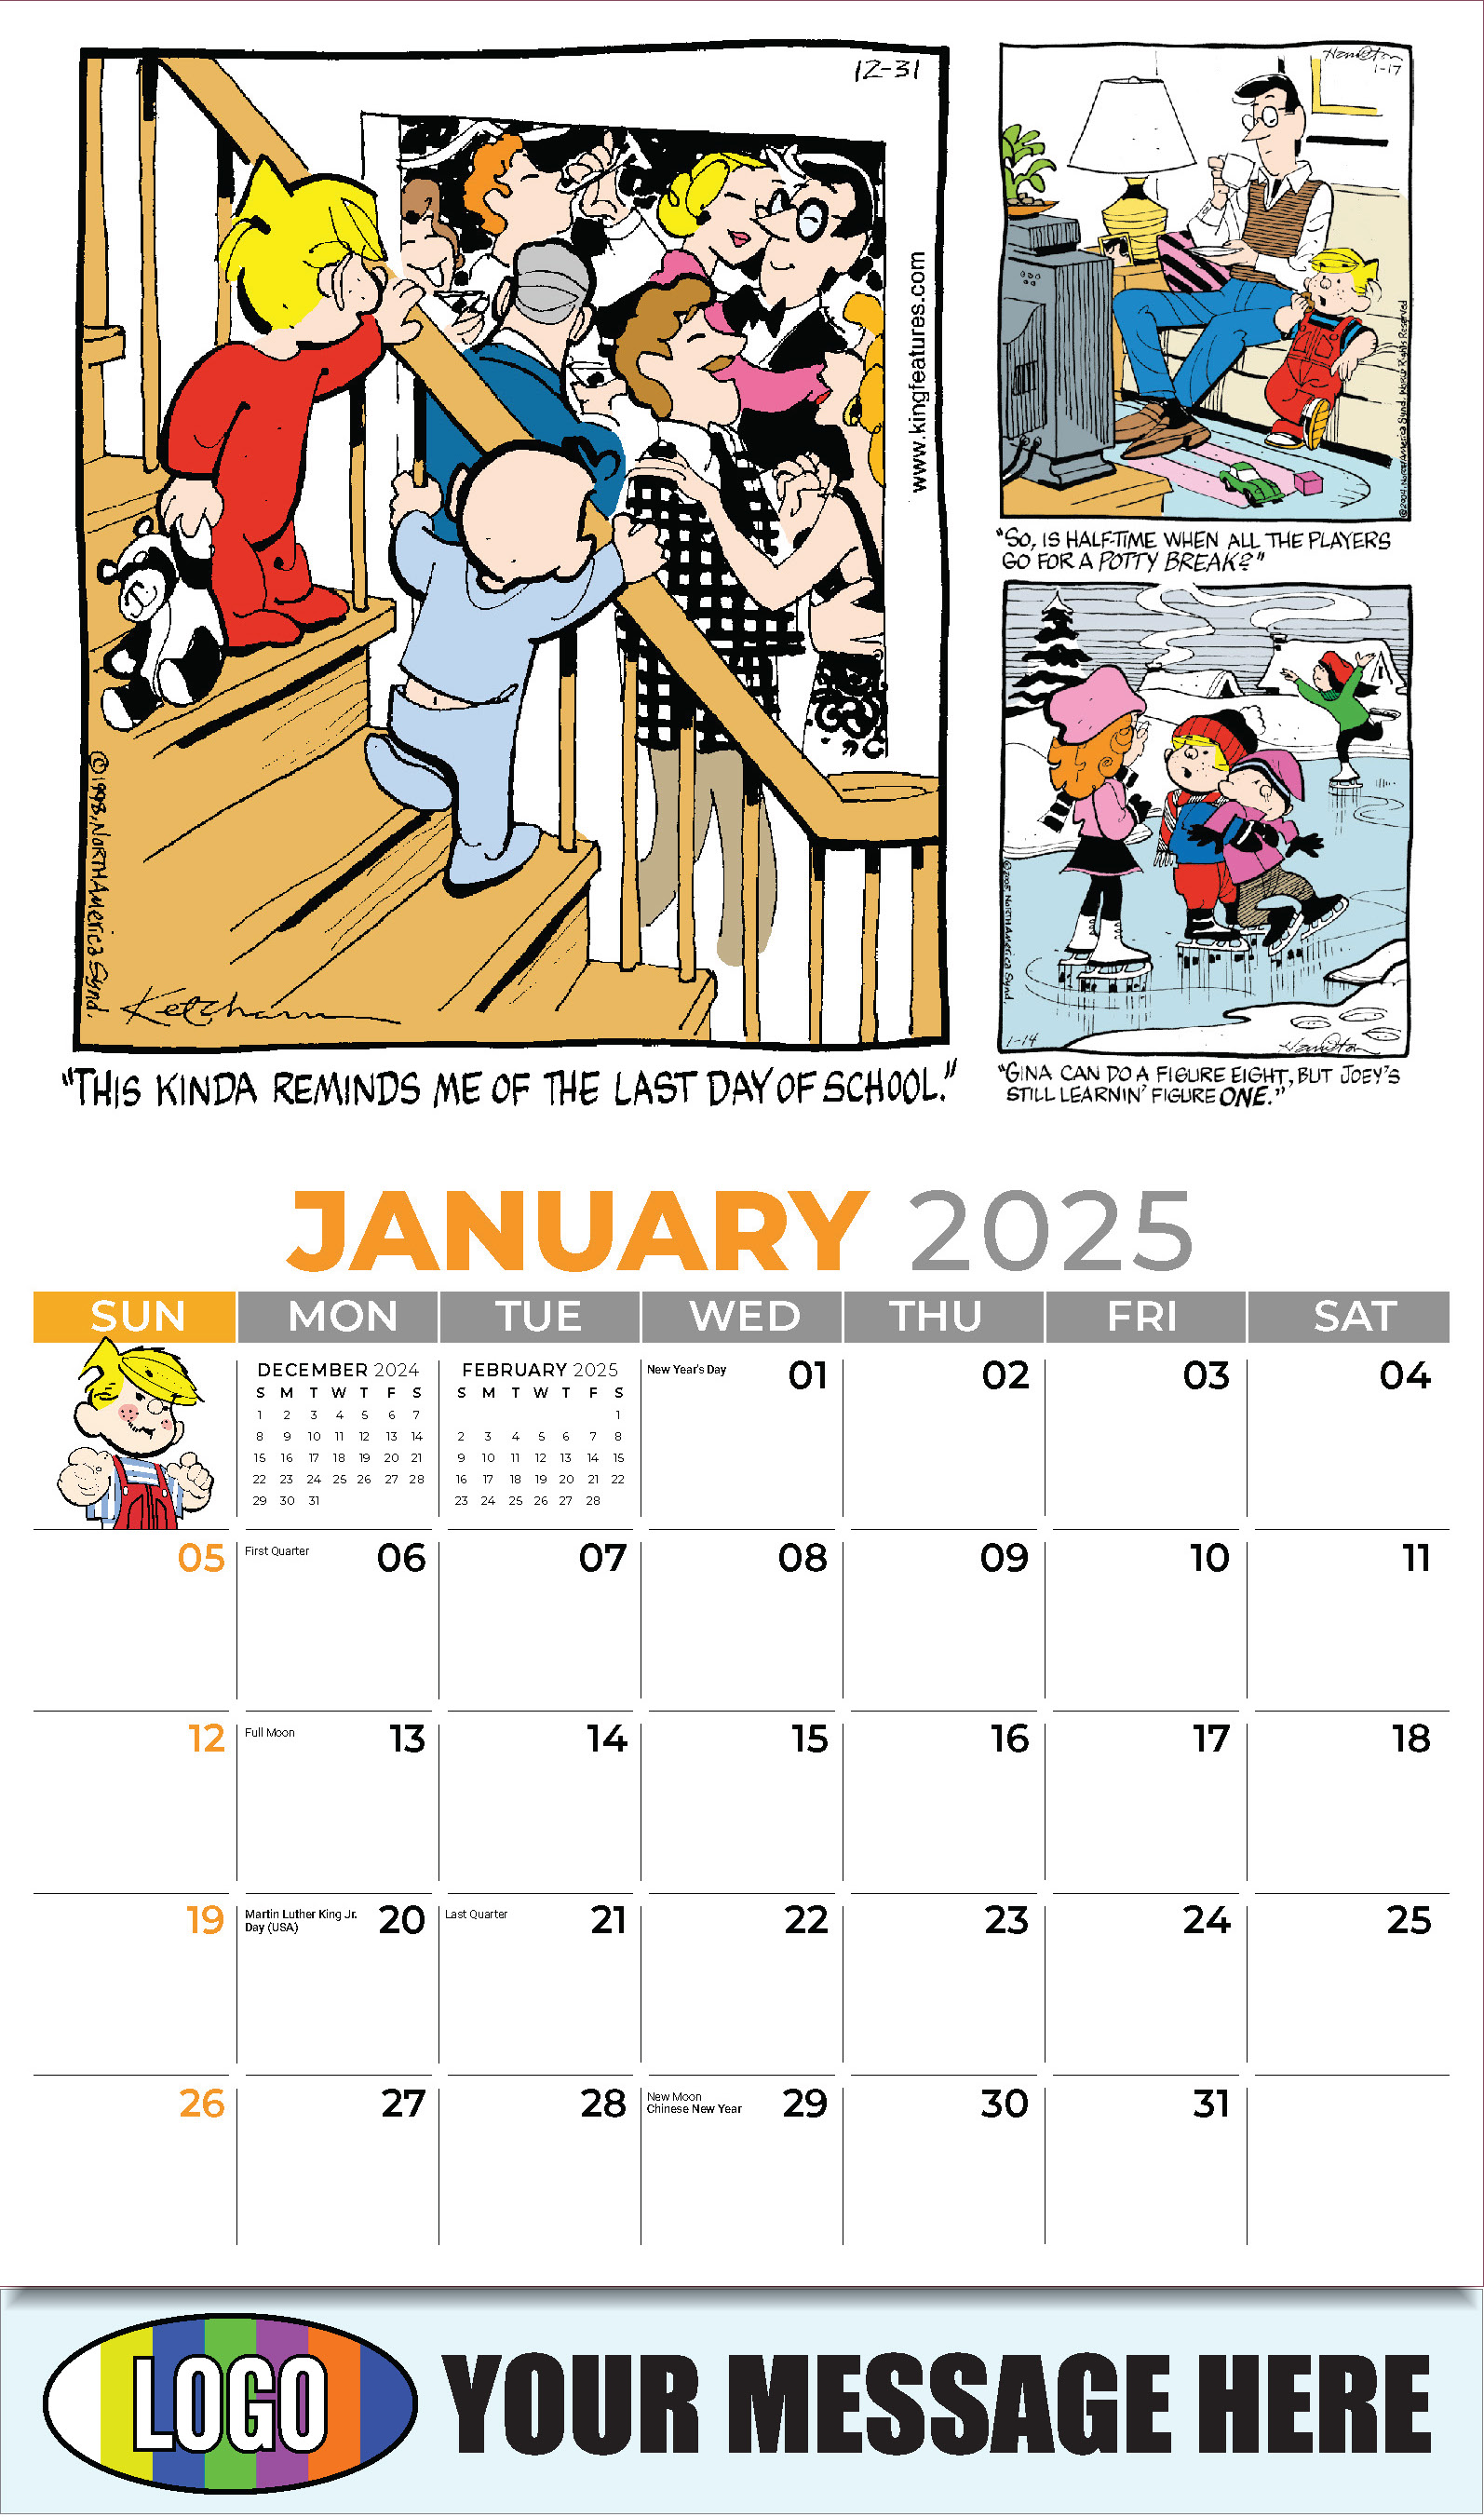 Dennis the Menace 2025 Business Promotional Wall Calendar - January